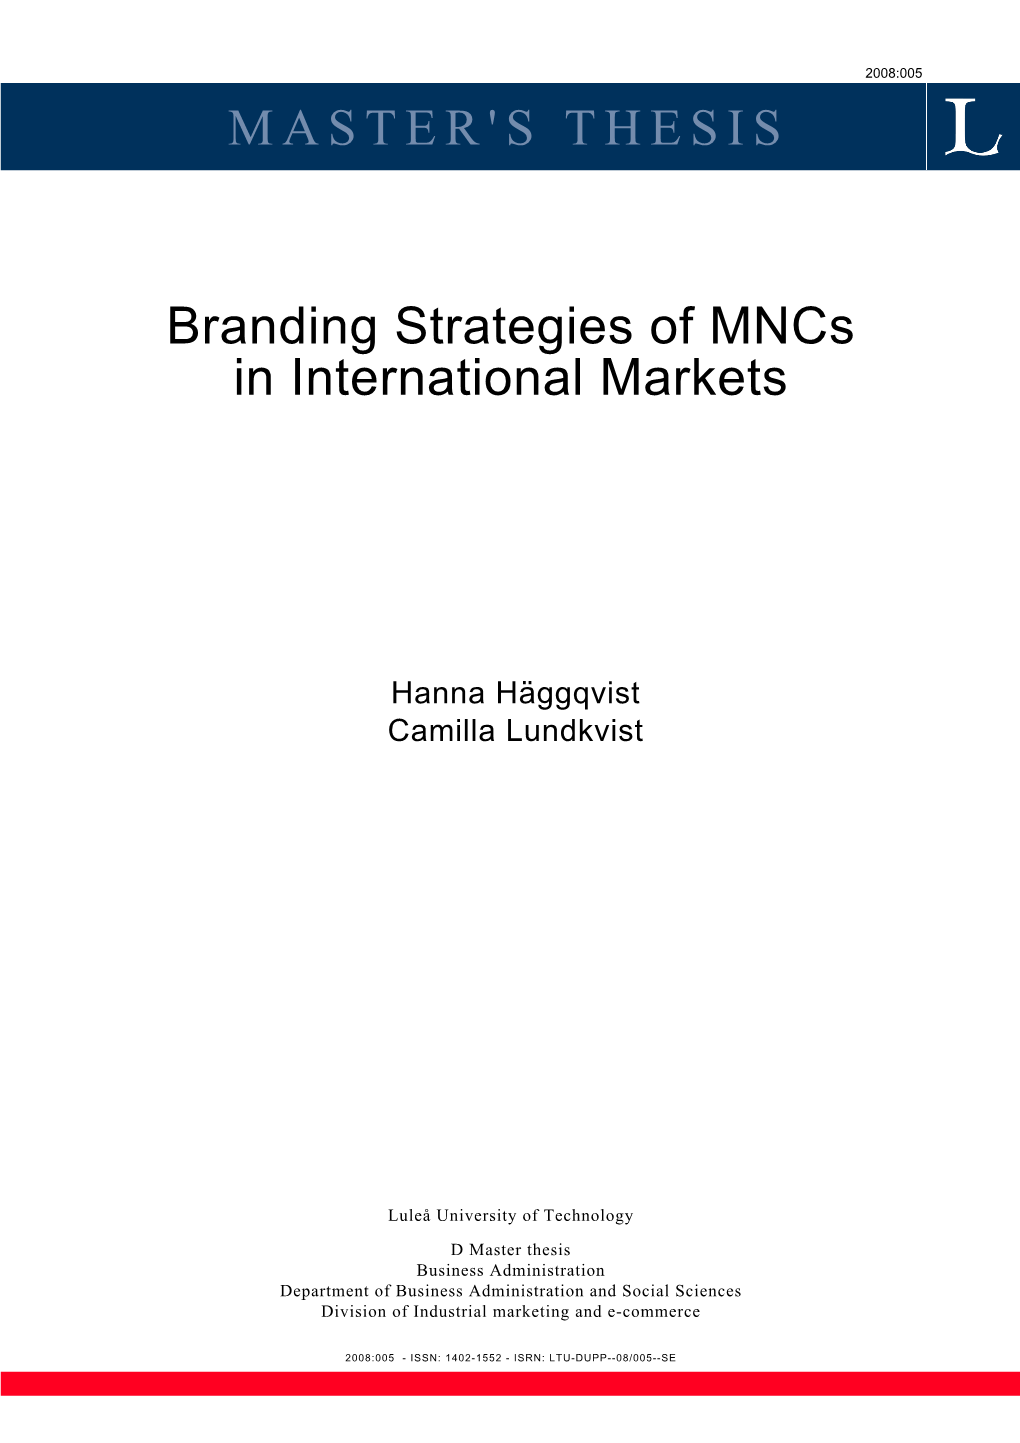 Branding Strategies of Mncs in International Markets